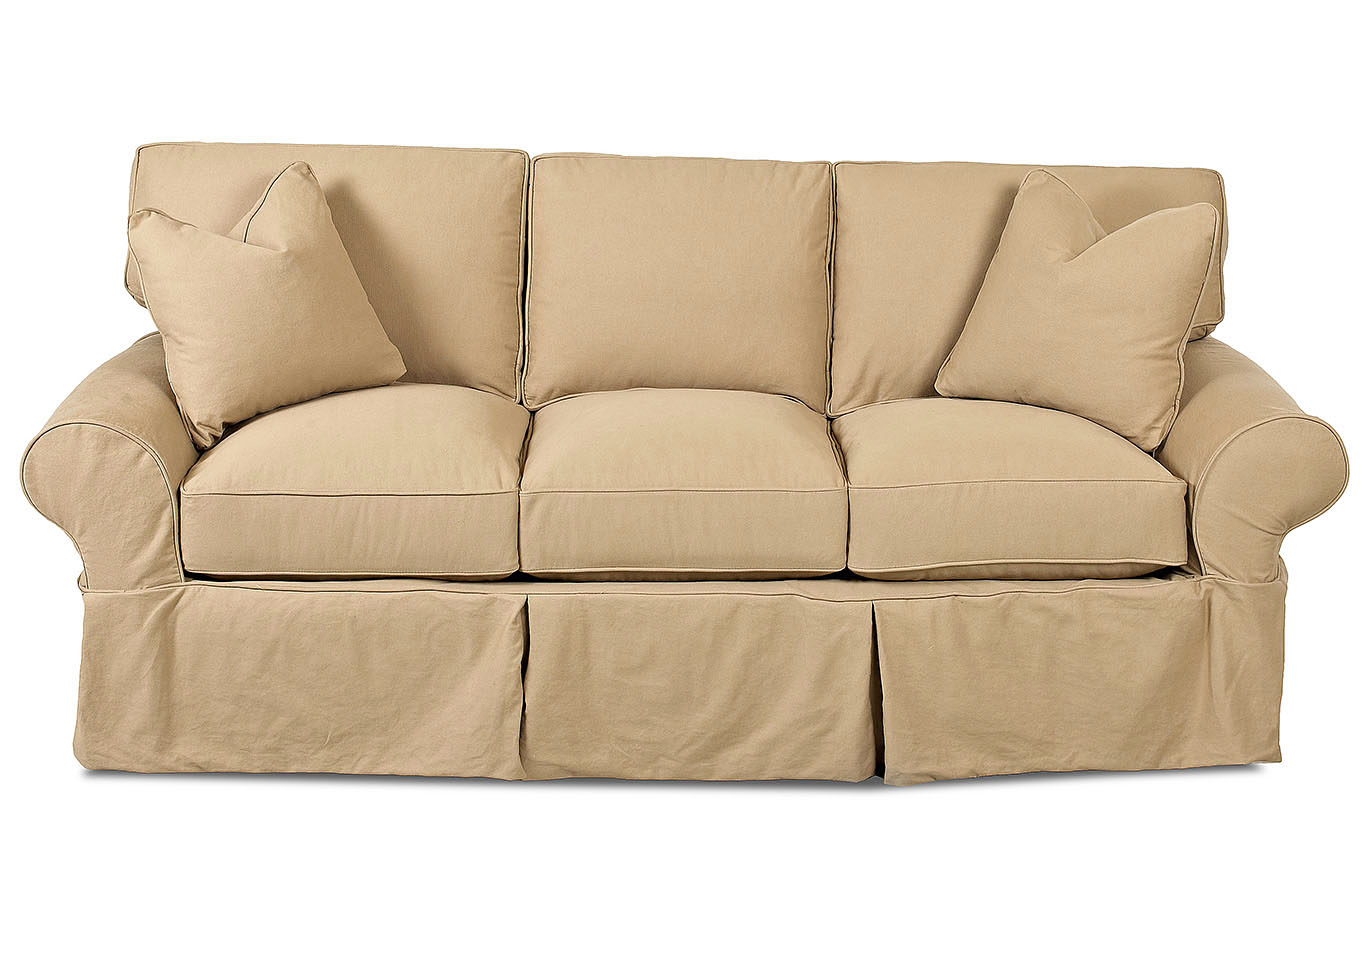 Patterns Classic Khaki Stationary Fabric Sofa,Klaussner Home Furnishings